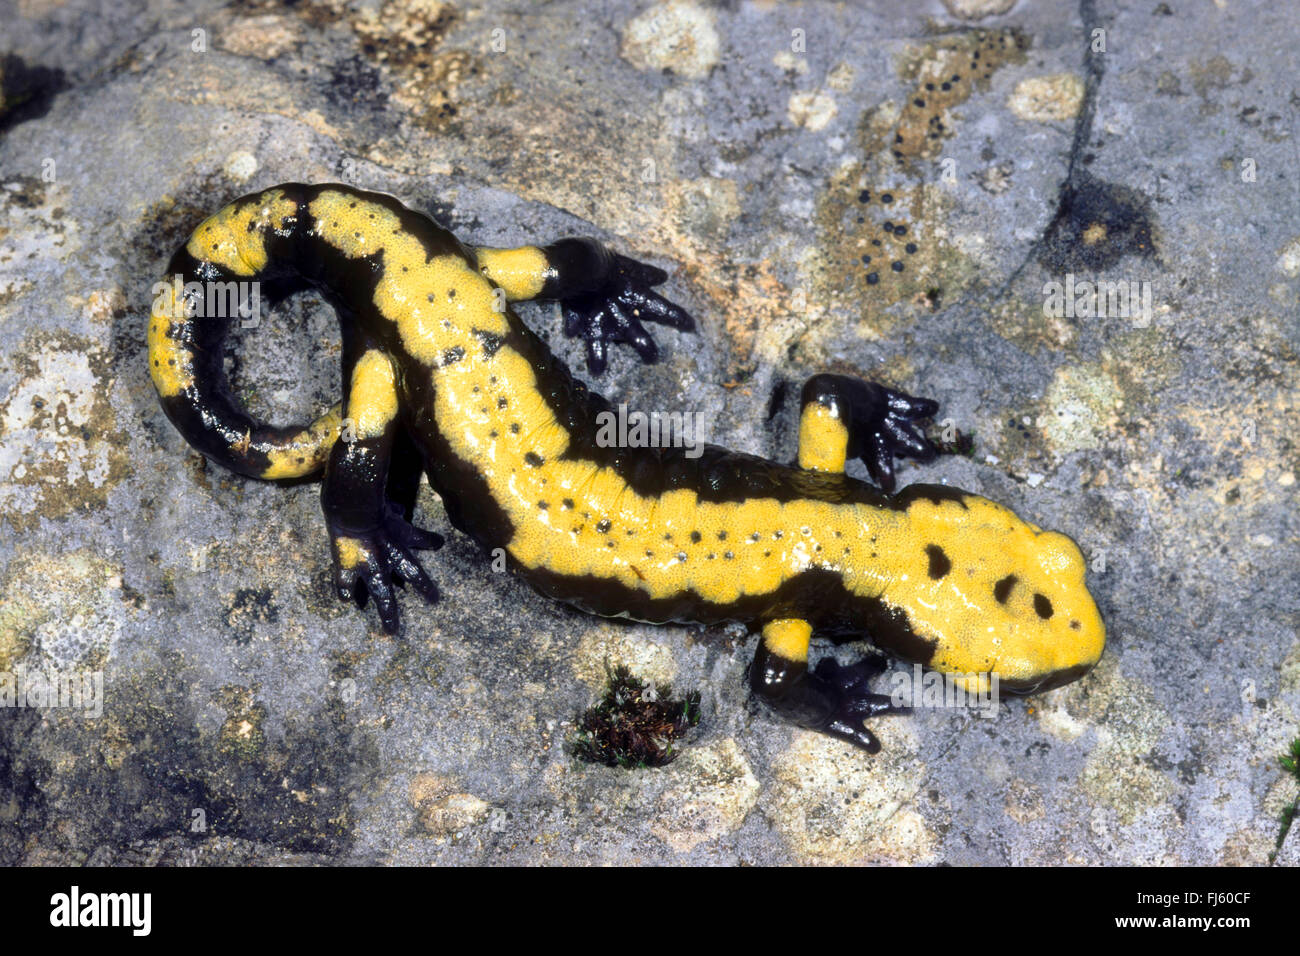 Alpine salamander, European Alpine salamander (Salamandra atra aurorae, Salamandra aurorae, Salamandra atra), on a rock, Germany Stock Photo